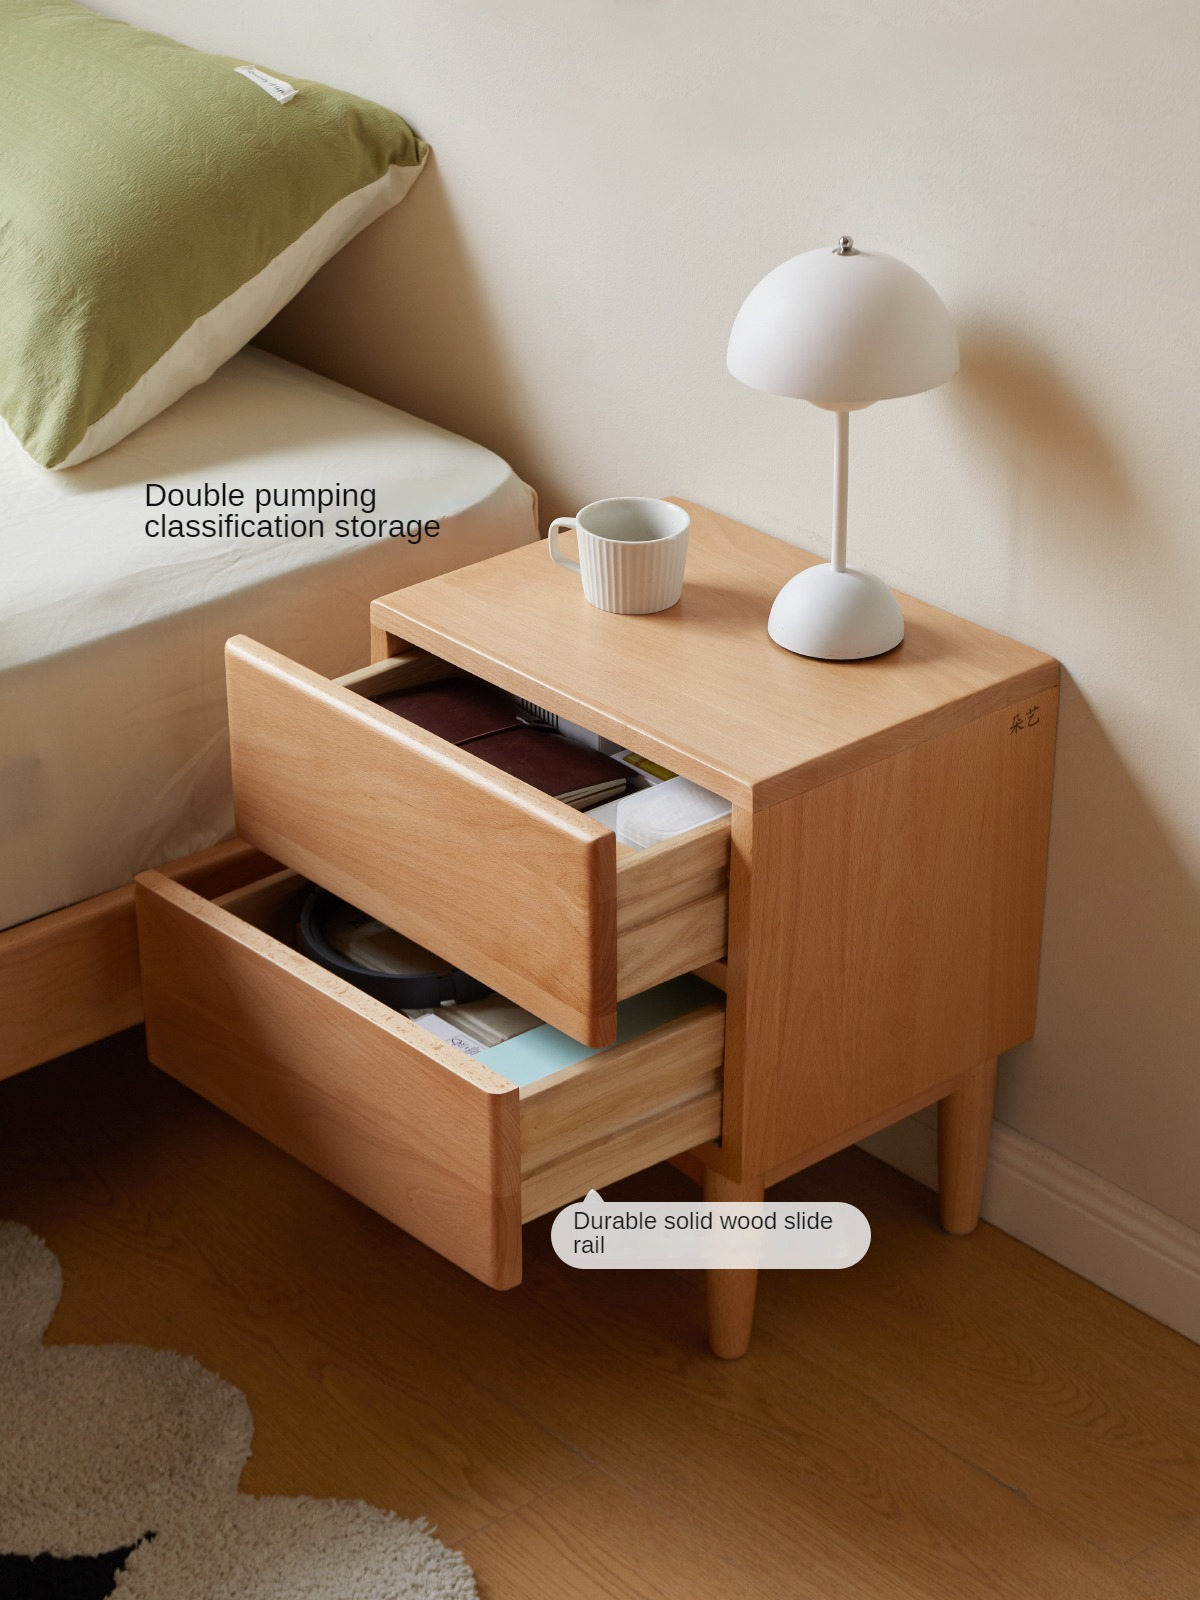 Beech solid wood bedside table and elevated storage rack, bedside bookshelf"